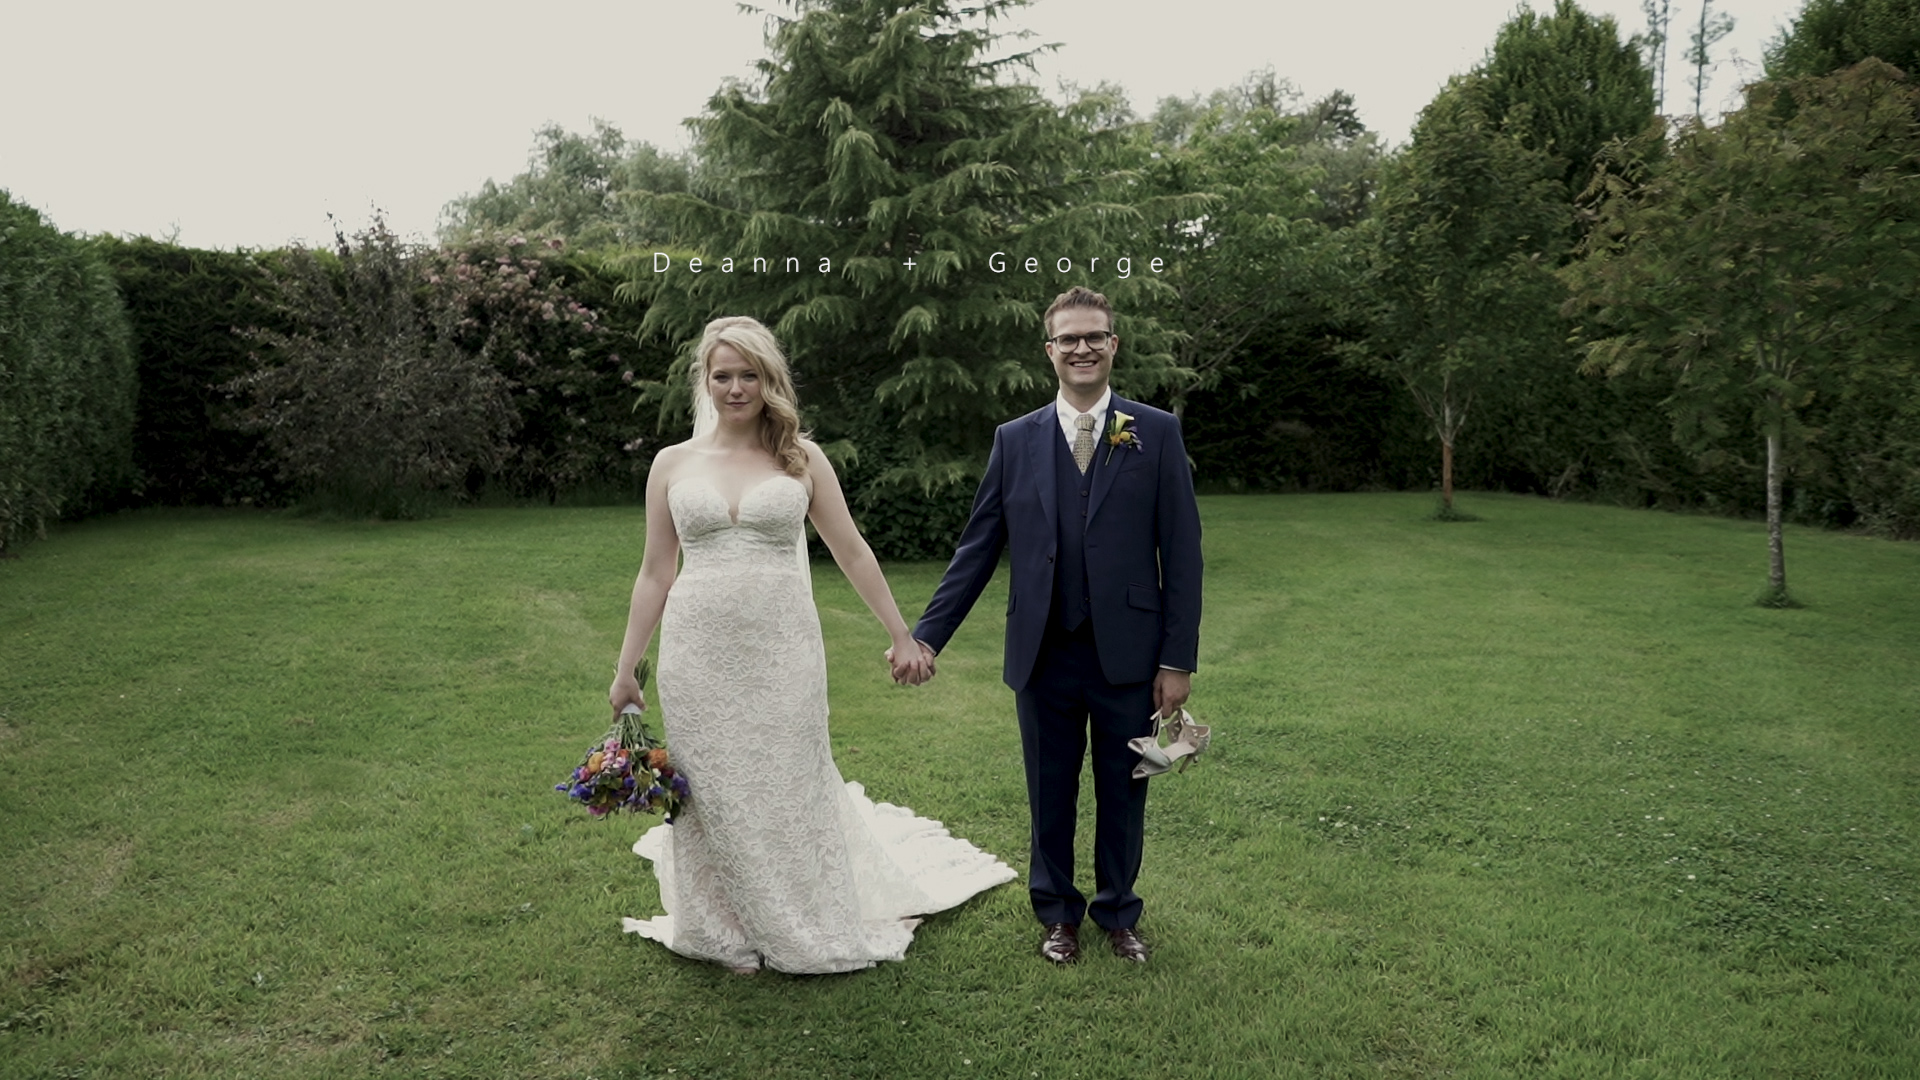 An Oldcastle Farm wedding video